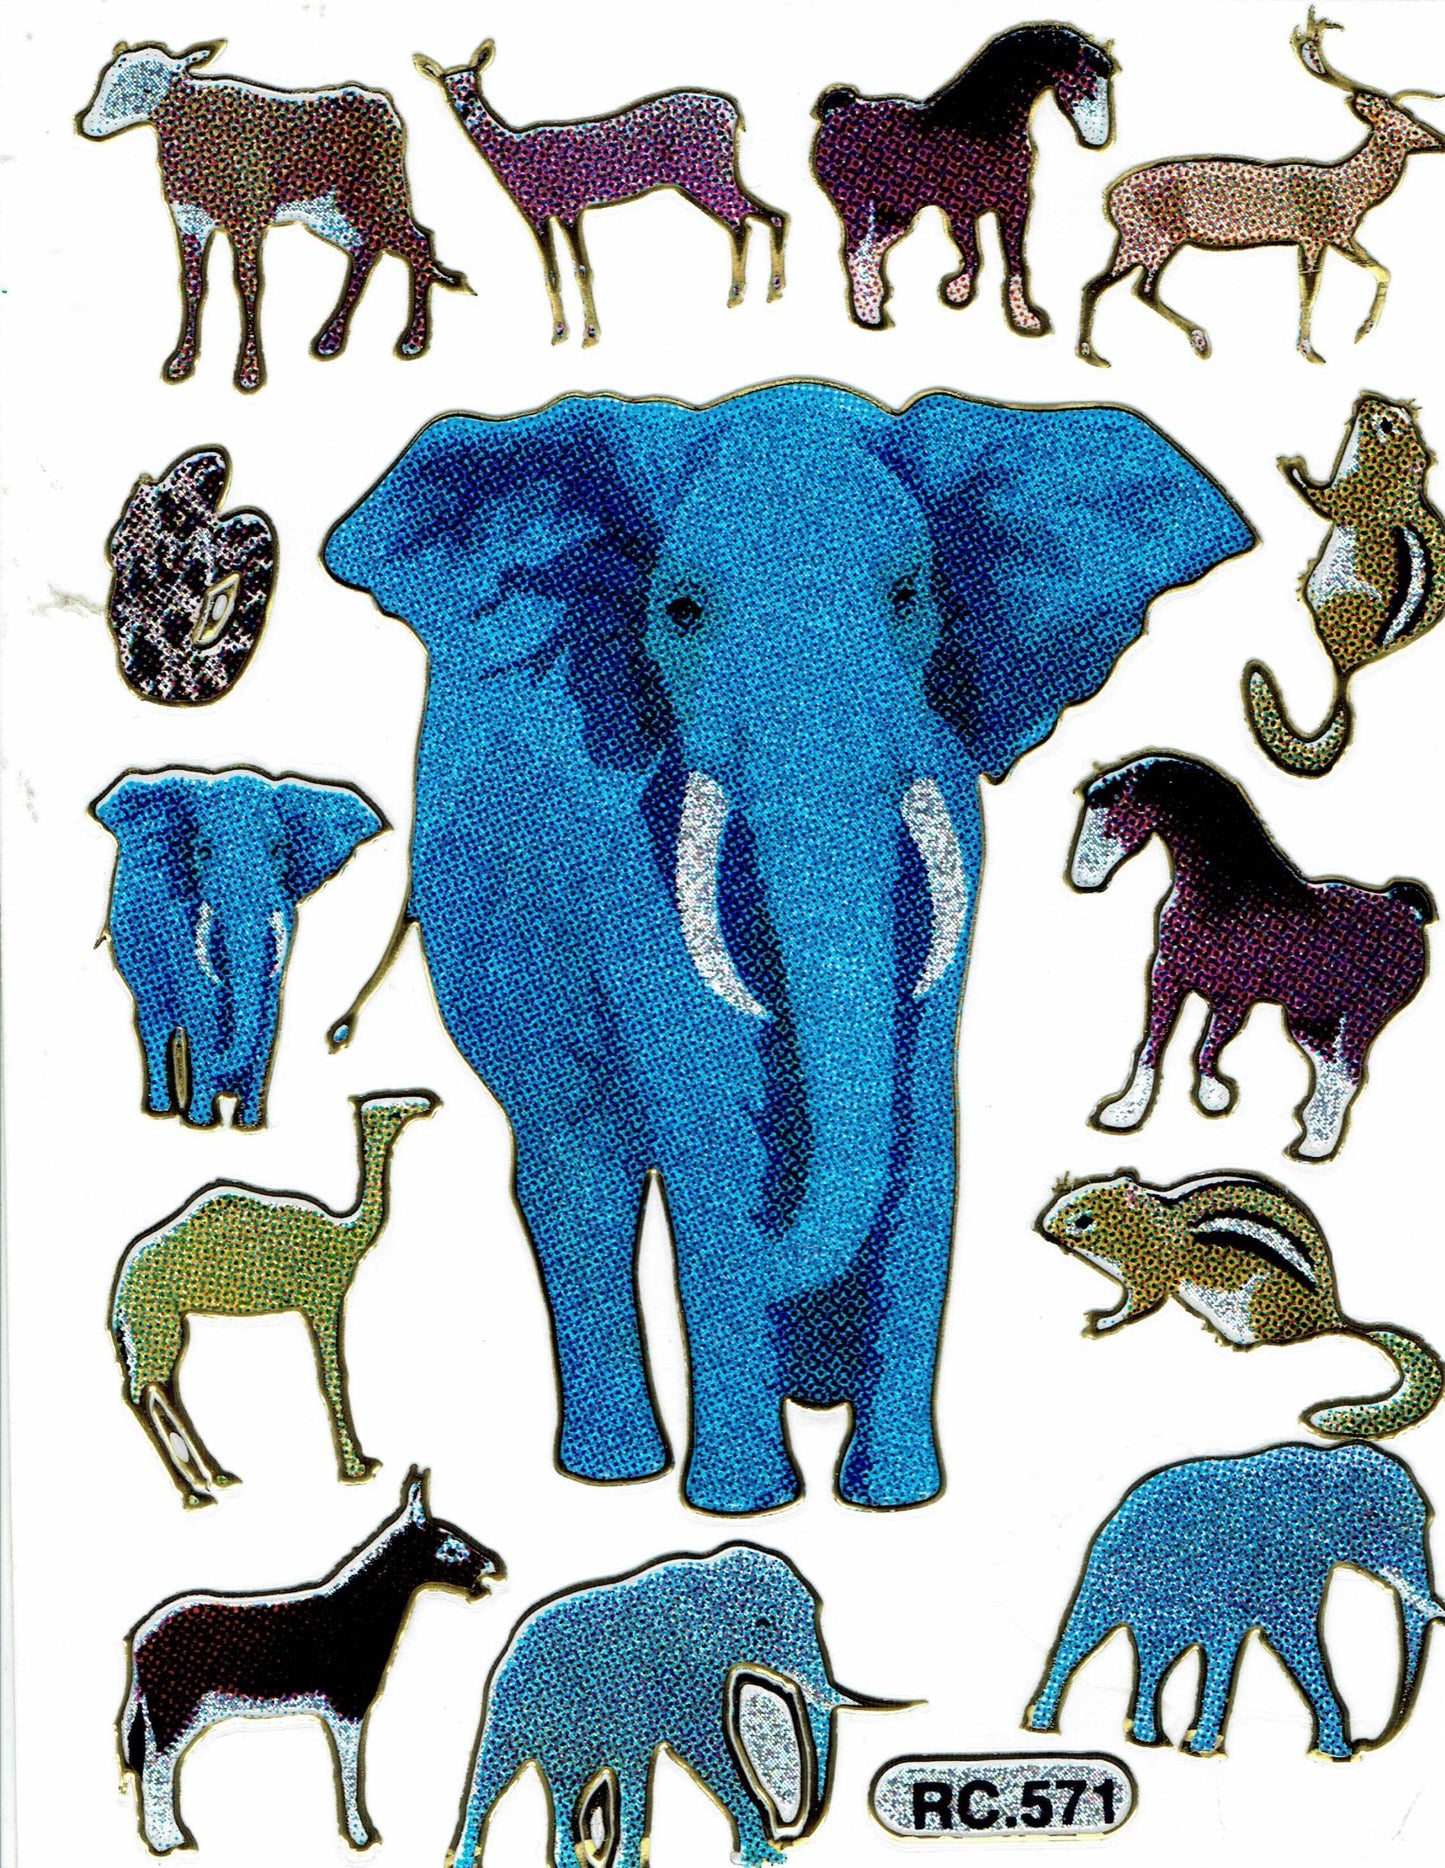 Elephant elephants colorful animals stickers stickers metallic glitter effect children's handicraft kindergarten 1 sheet 517